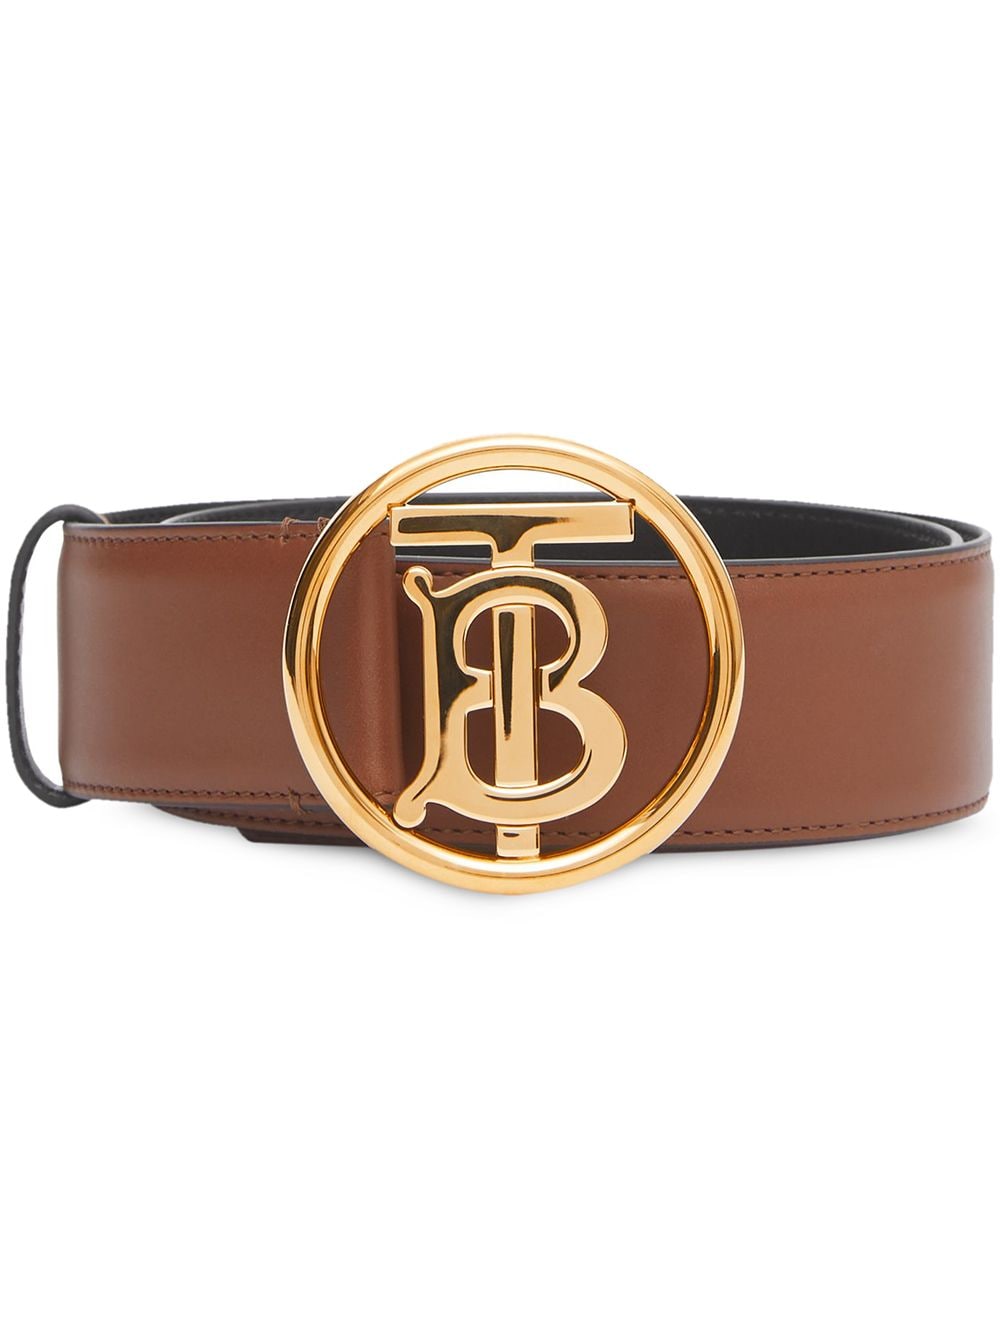 Burberry Monogram Buckle Belt - Farfetch